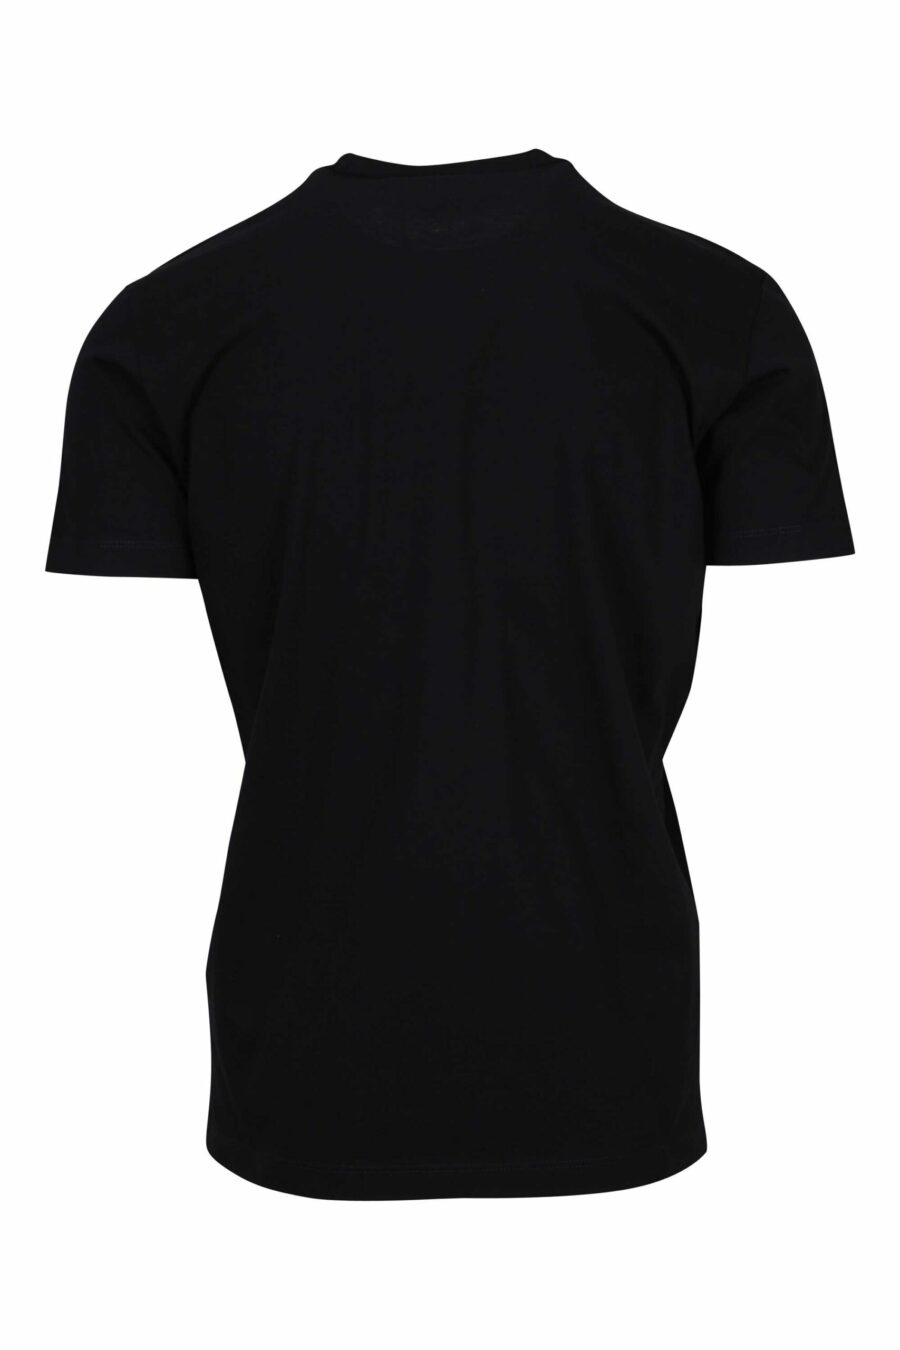 Schwarzes T-Shirt mit maxilogo "D2"-Flagge - 8054148332518 1 skaliert